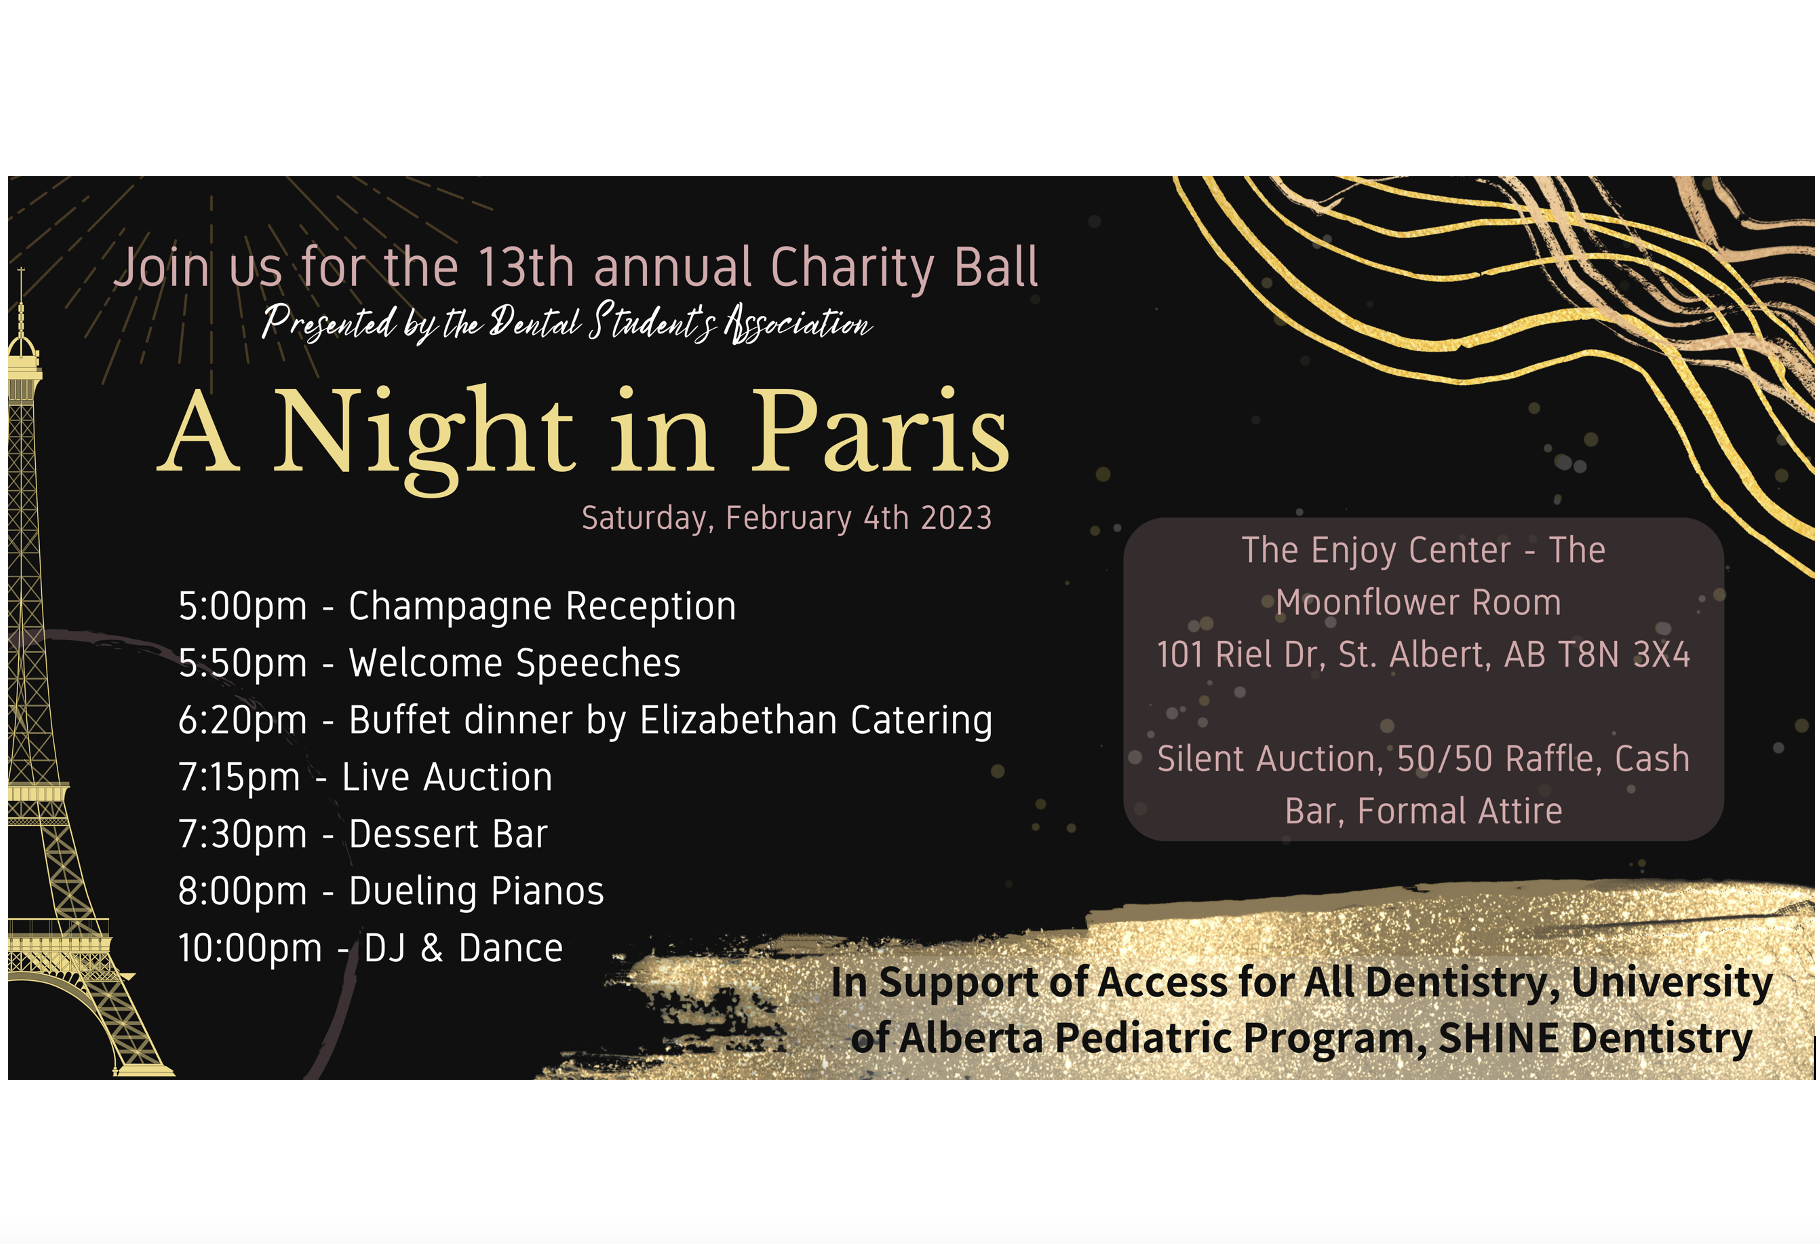 The 13th Annual Charity Ball